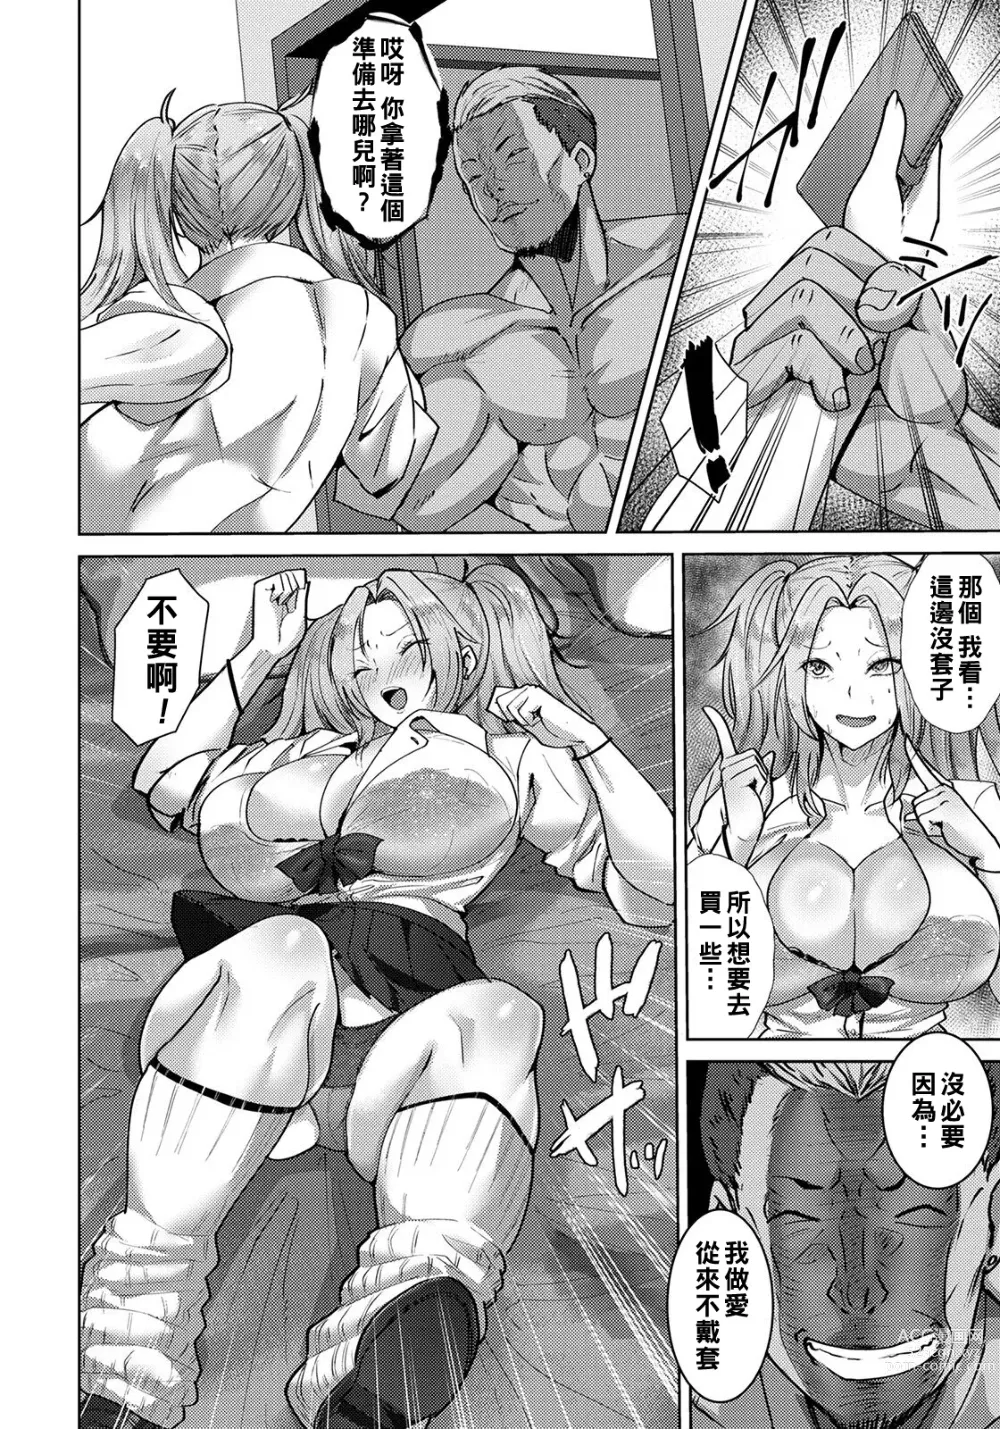 Page 6 of manga Amai Wana no Daishou